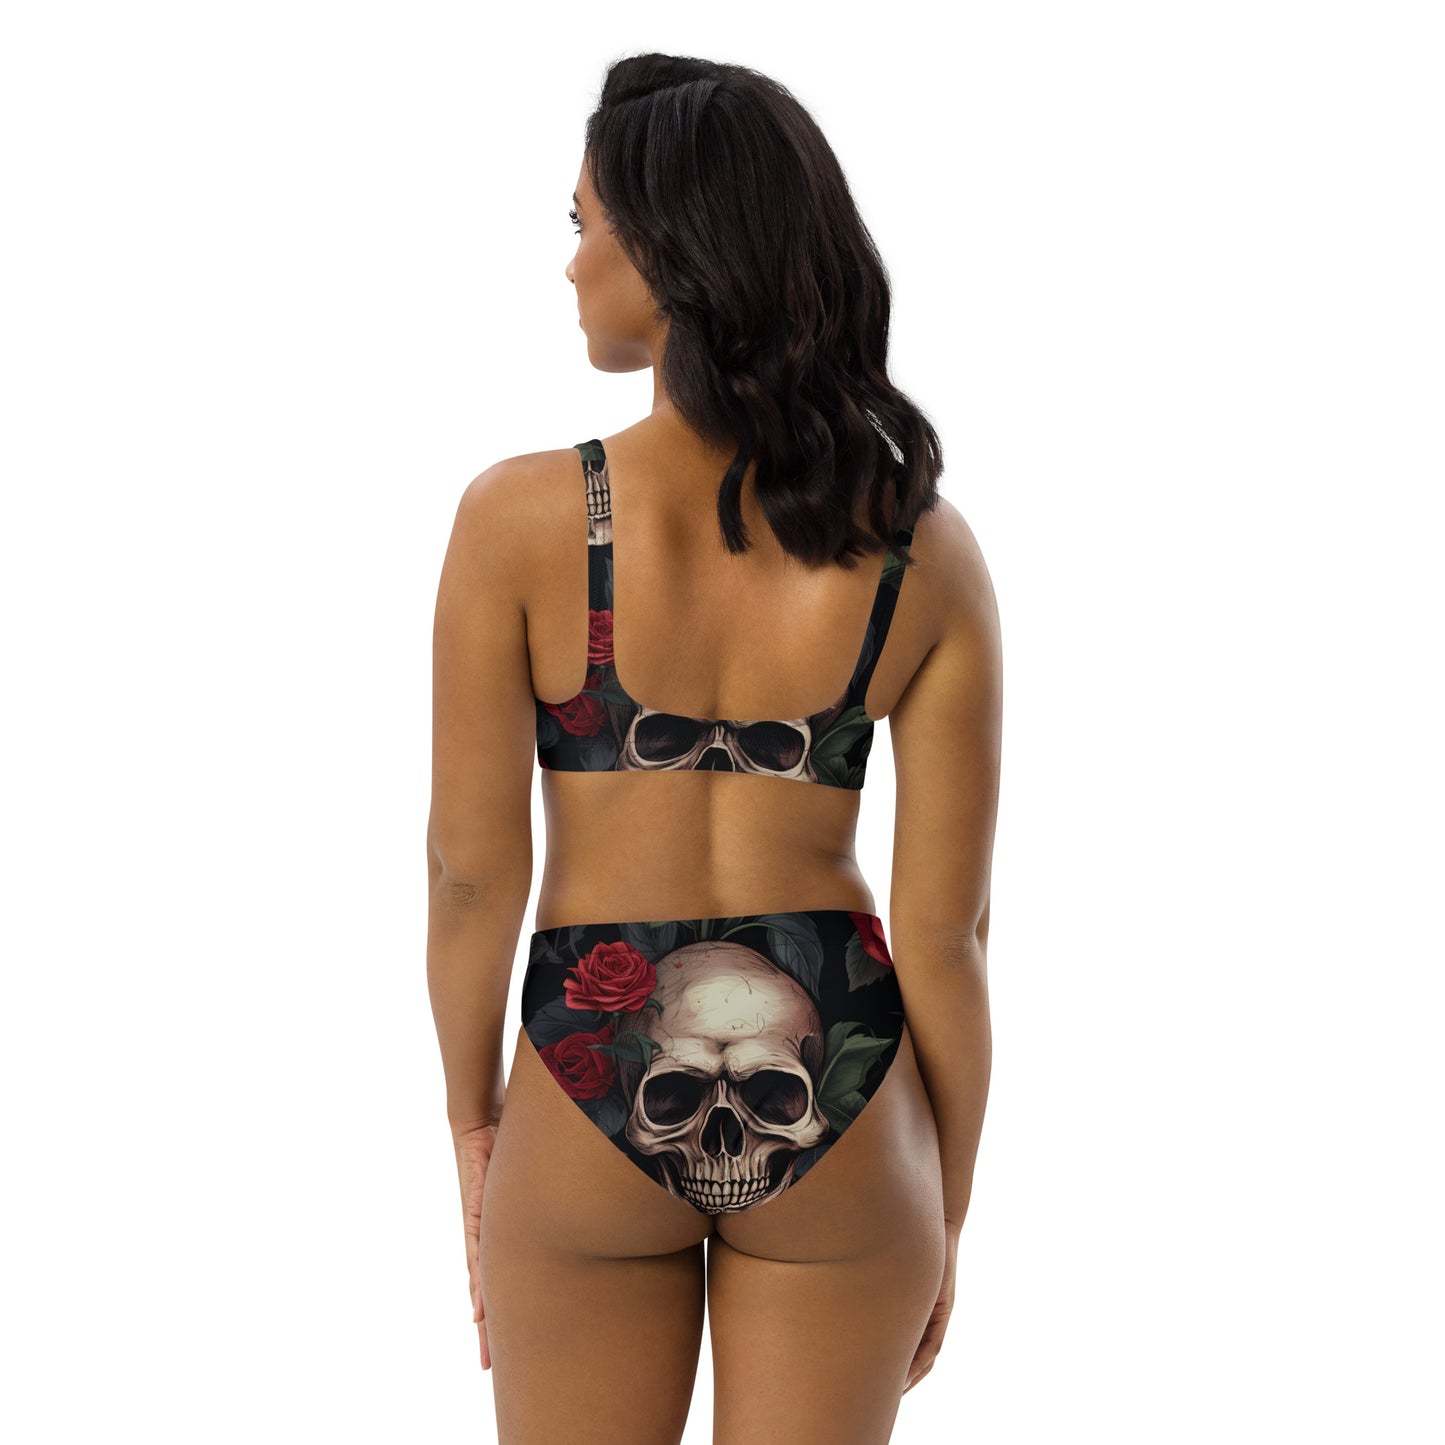 Bikini Goth doux / Maillot de bain gothique avec crâne / Bikini taille haute recyclé / Mode Eco Goth